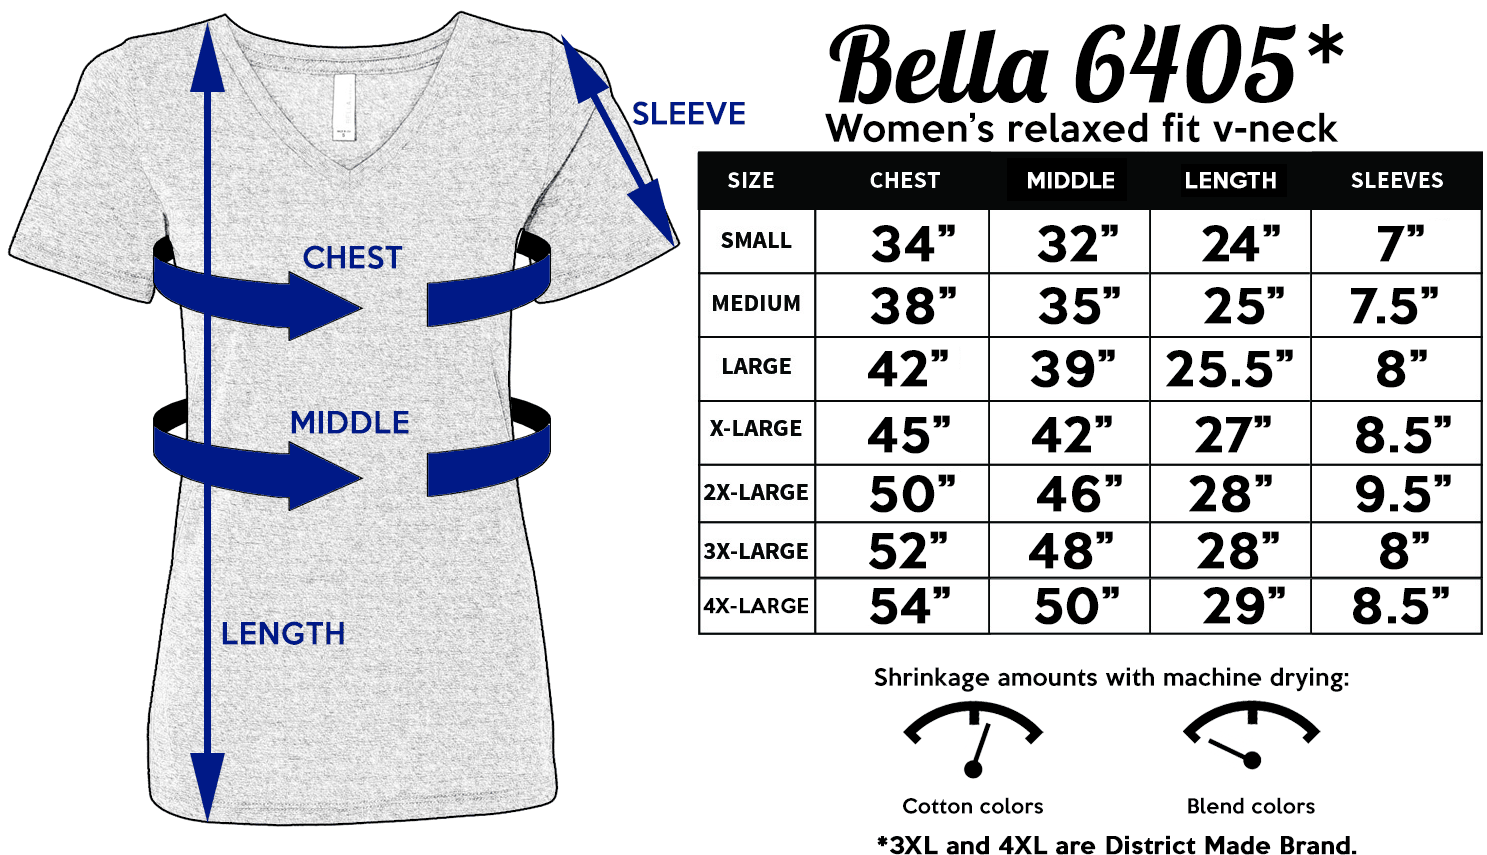 Bella Canvas T Shirt Size Chart